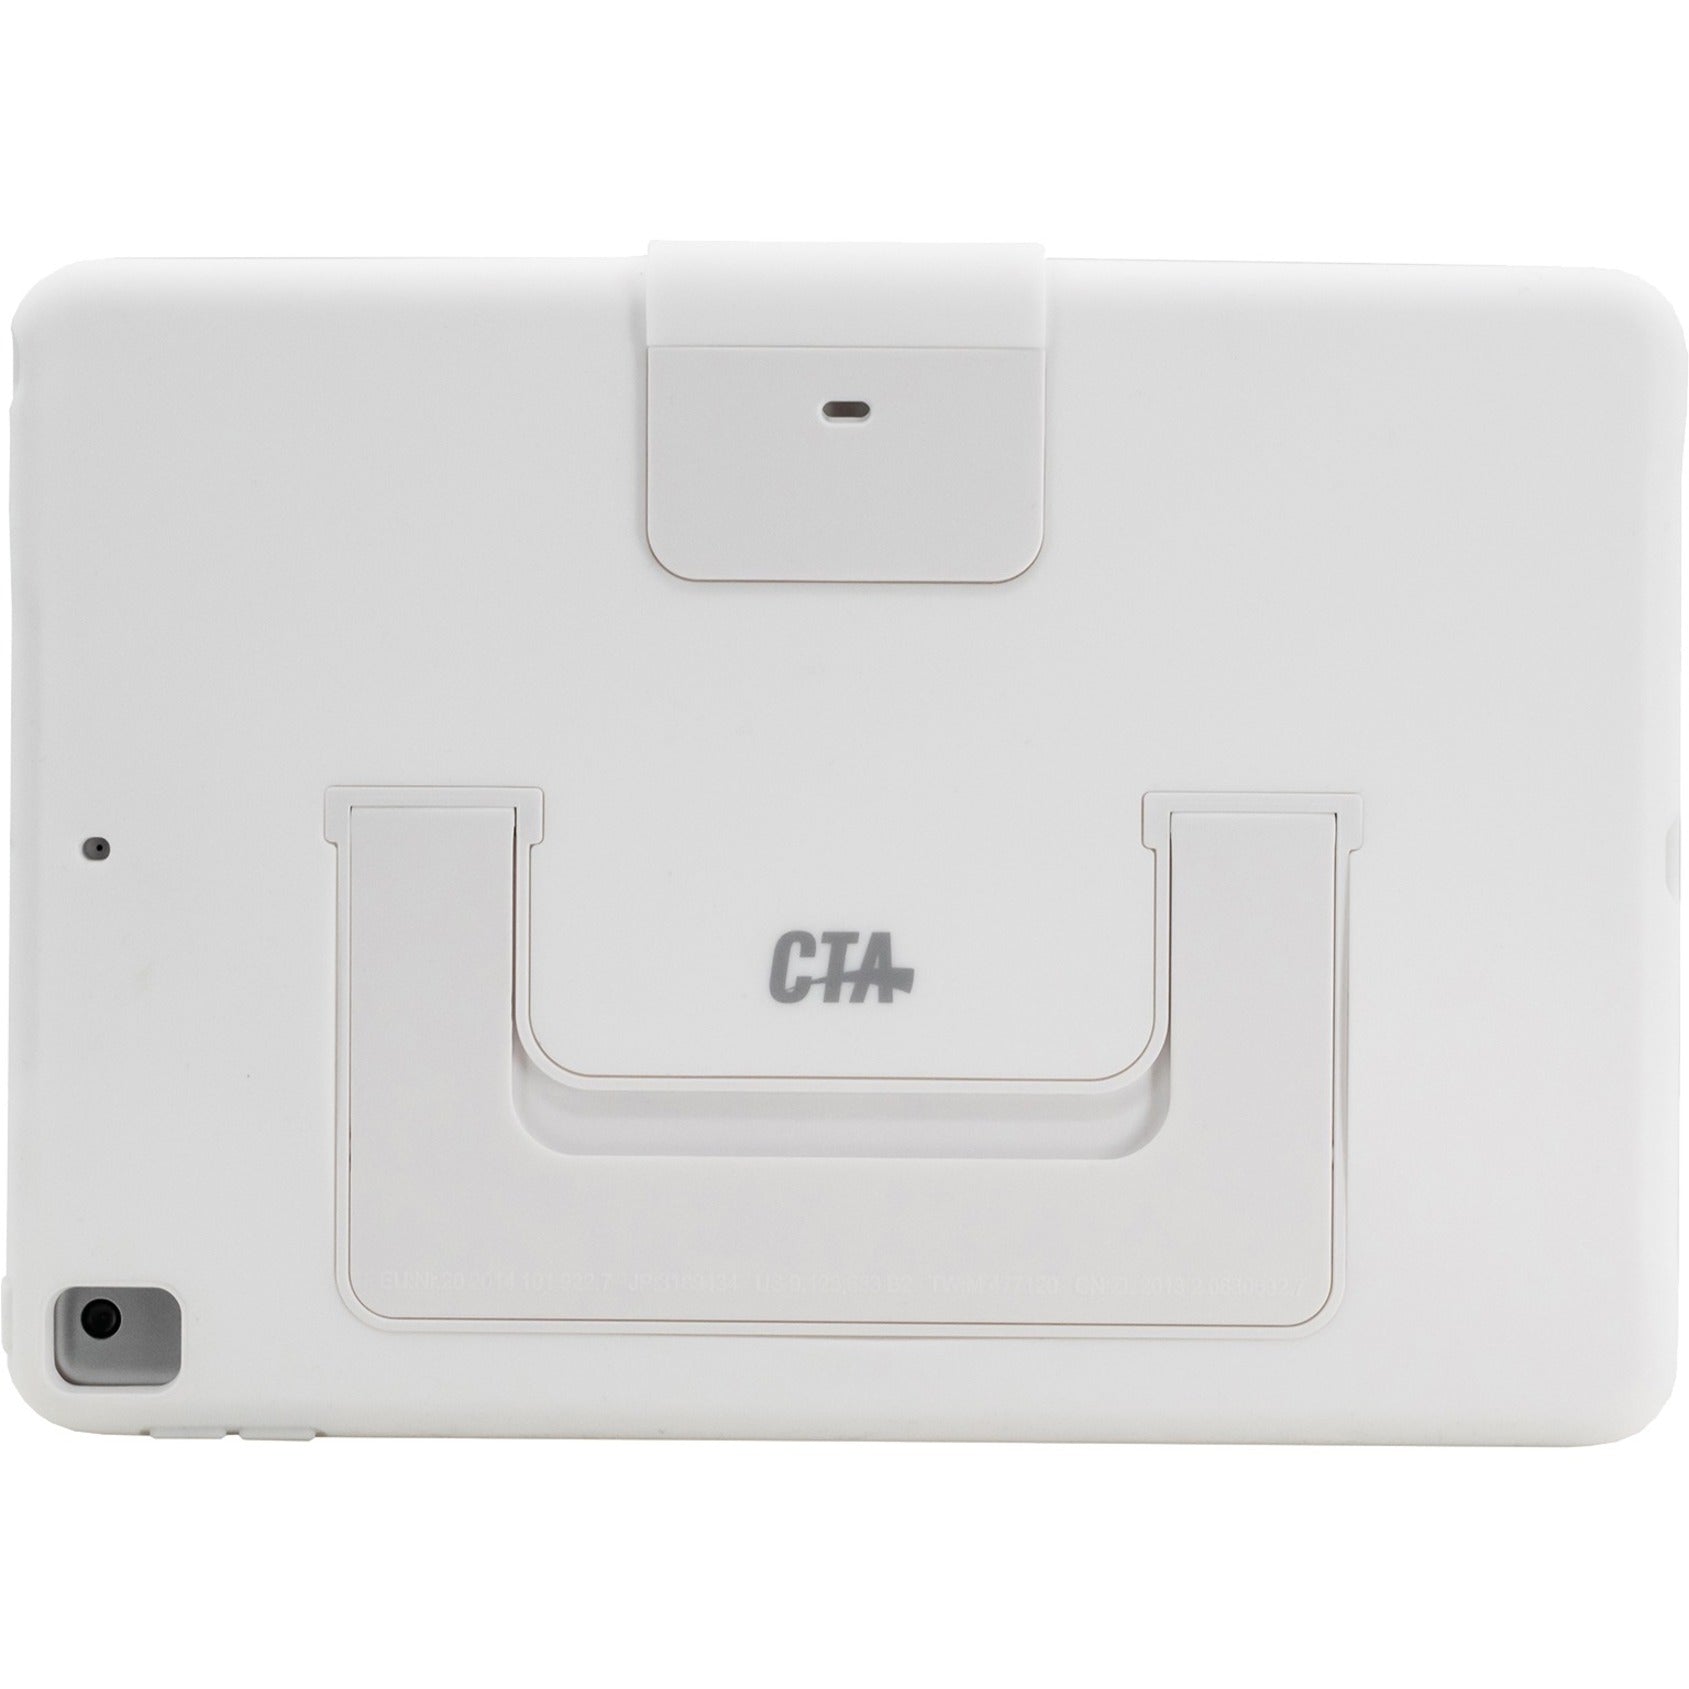 CTA Digital PAD-SCKTW10 Security Case, White - Impact Resistant, Anti-theft, Rugged, Kickstand, Portable